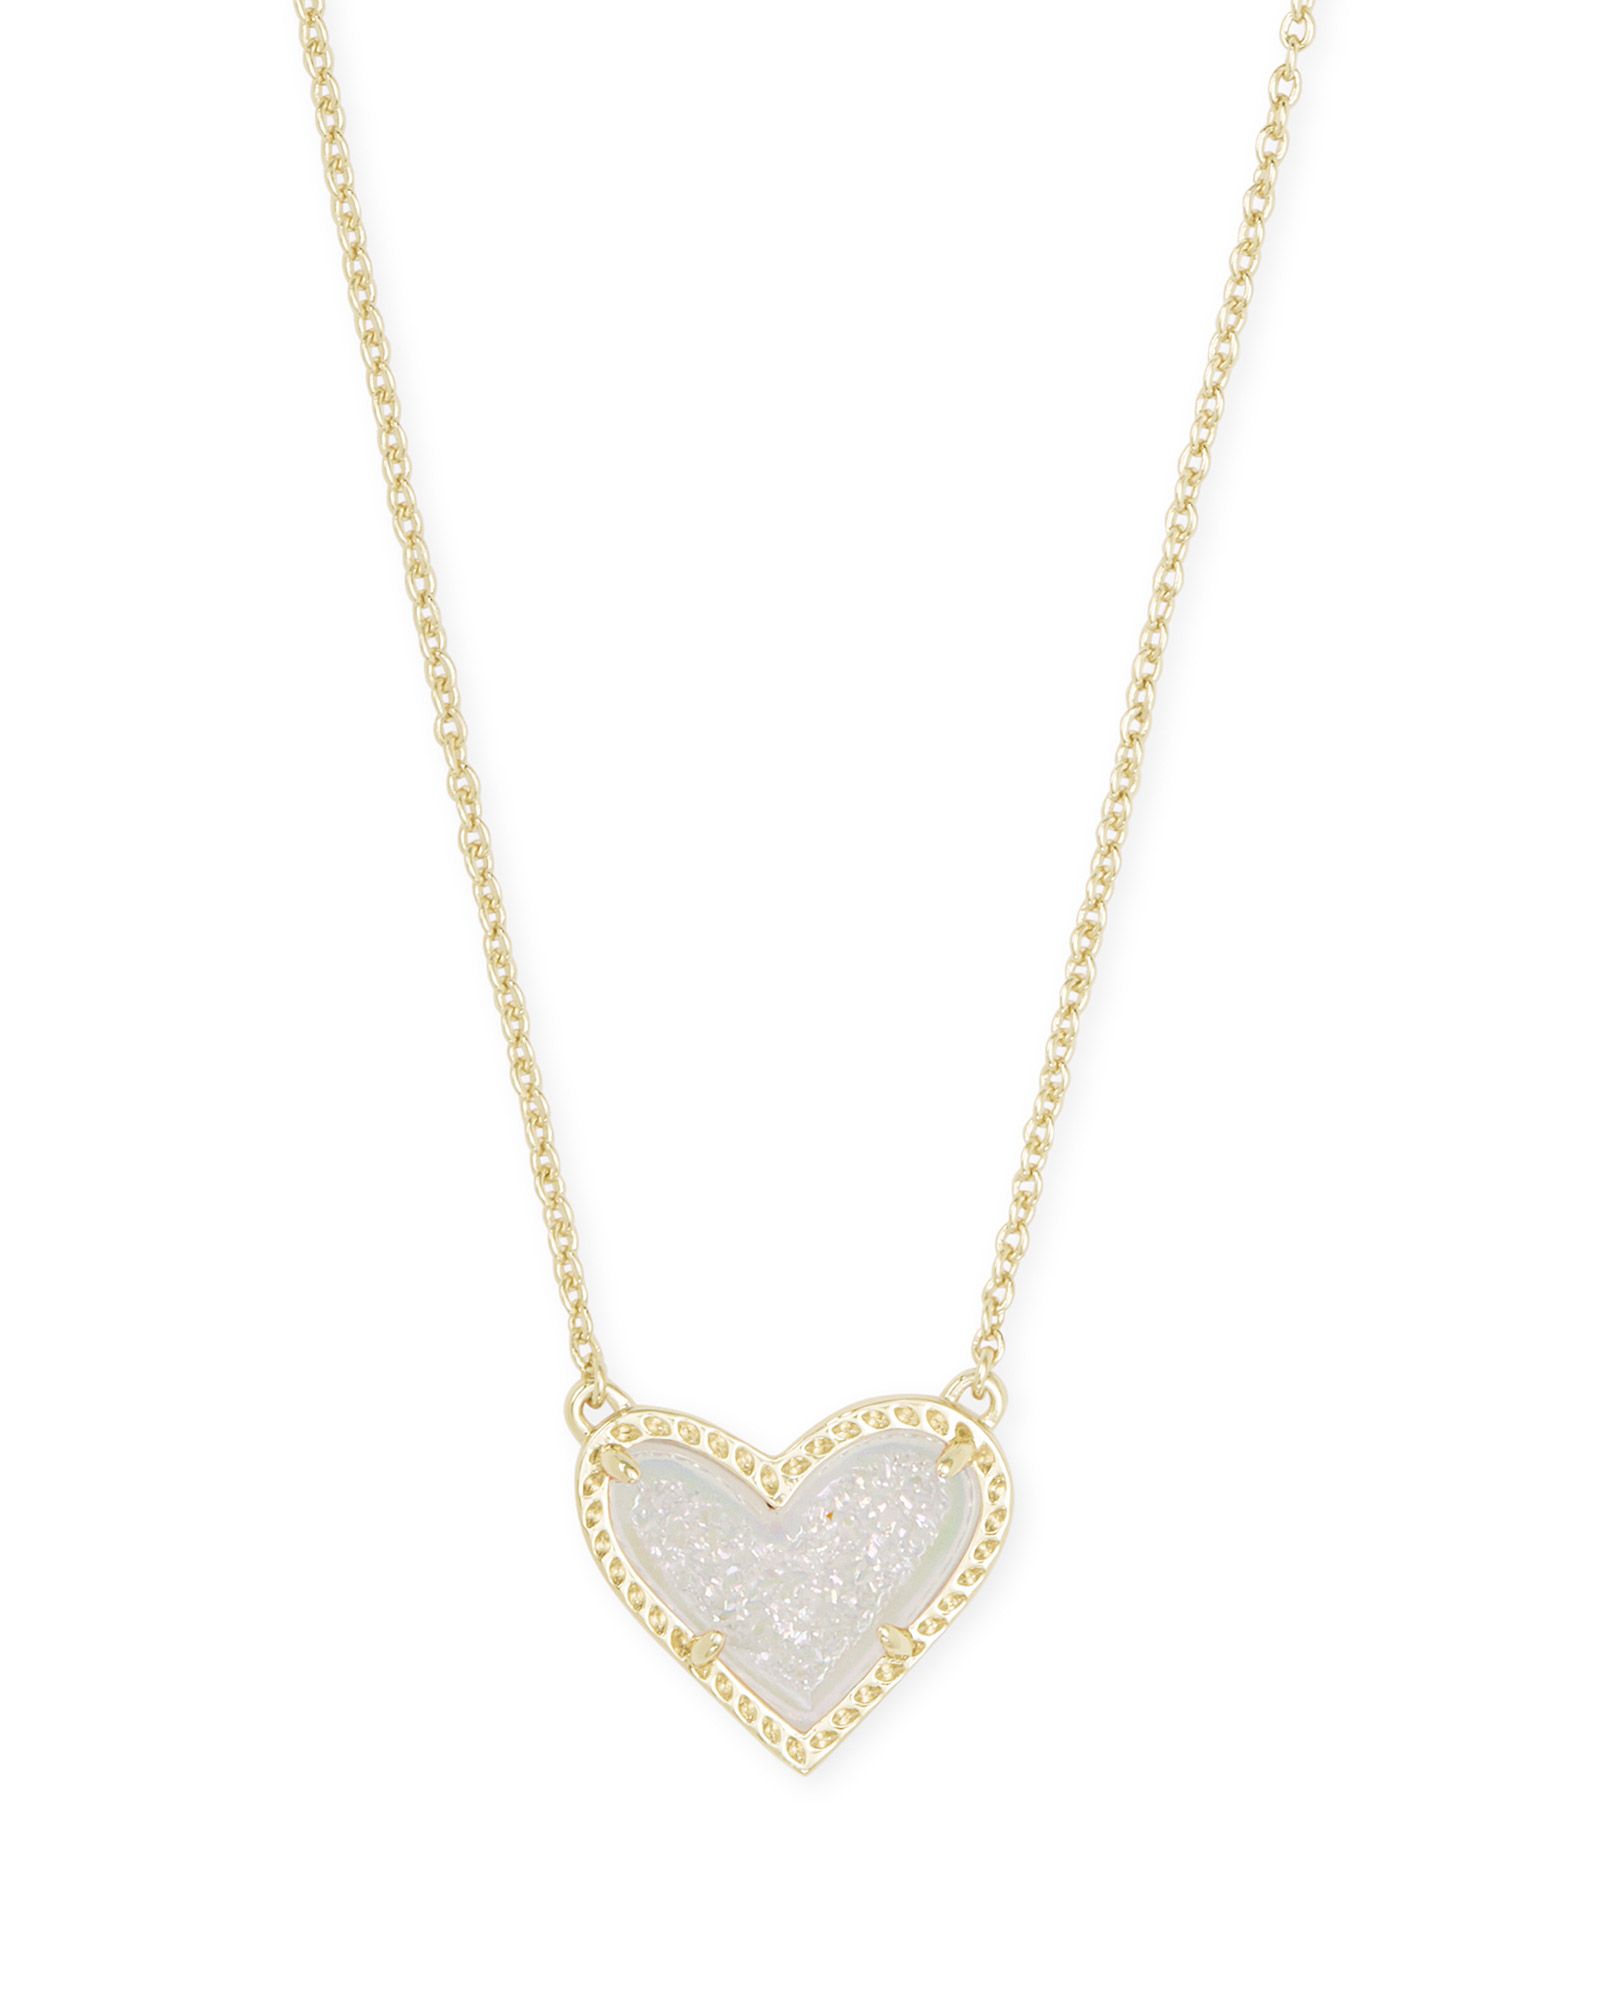 Ari Heart Gold Pendant Necklace in Iridescent Drusy | Kendra Scott